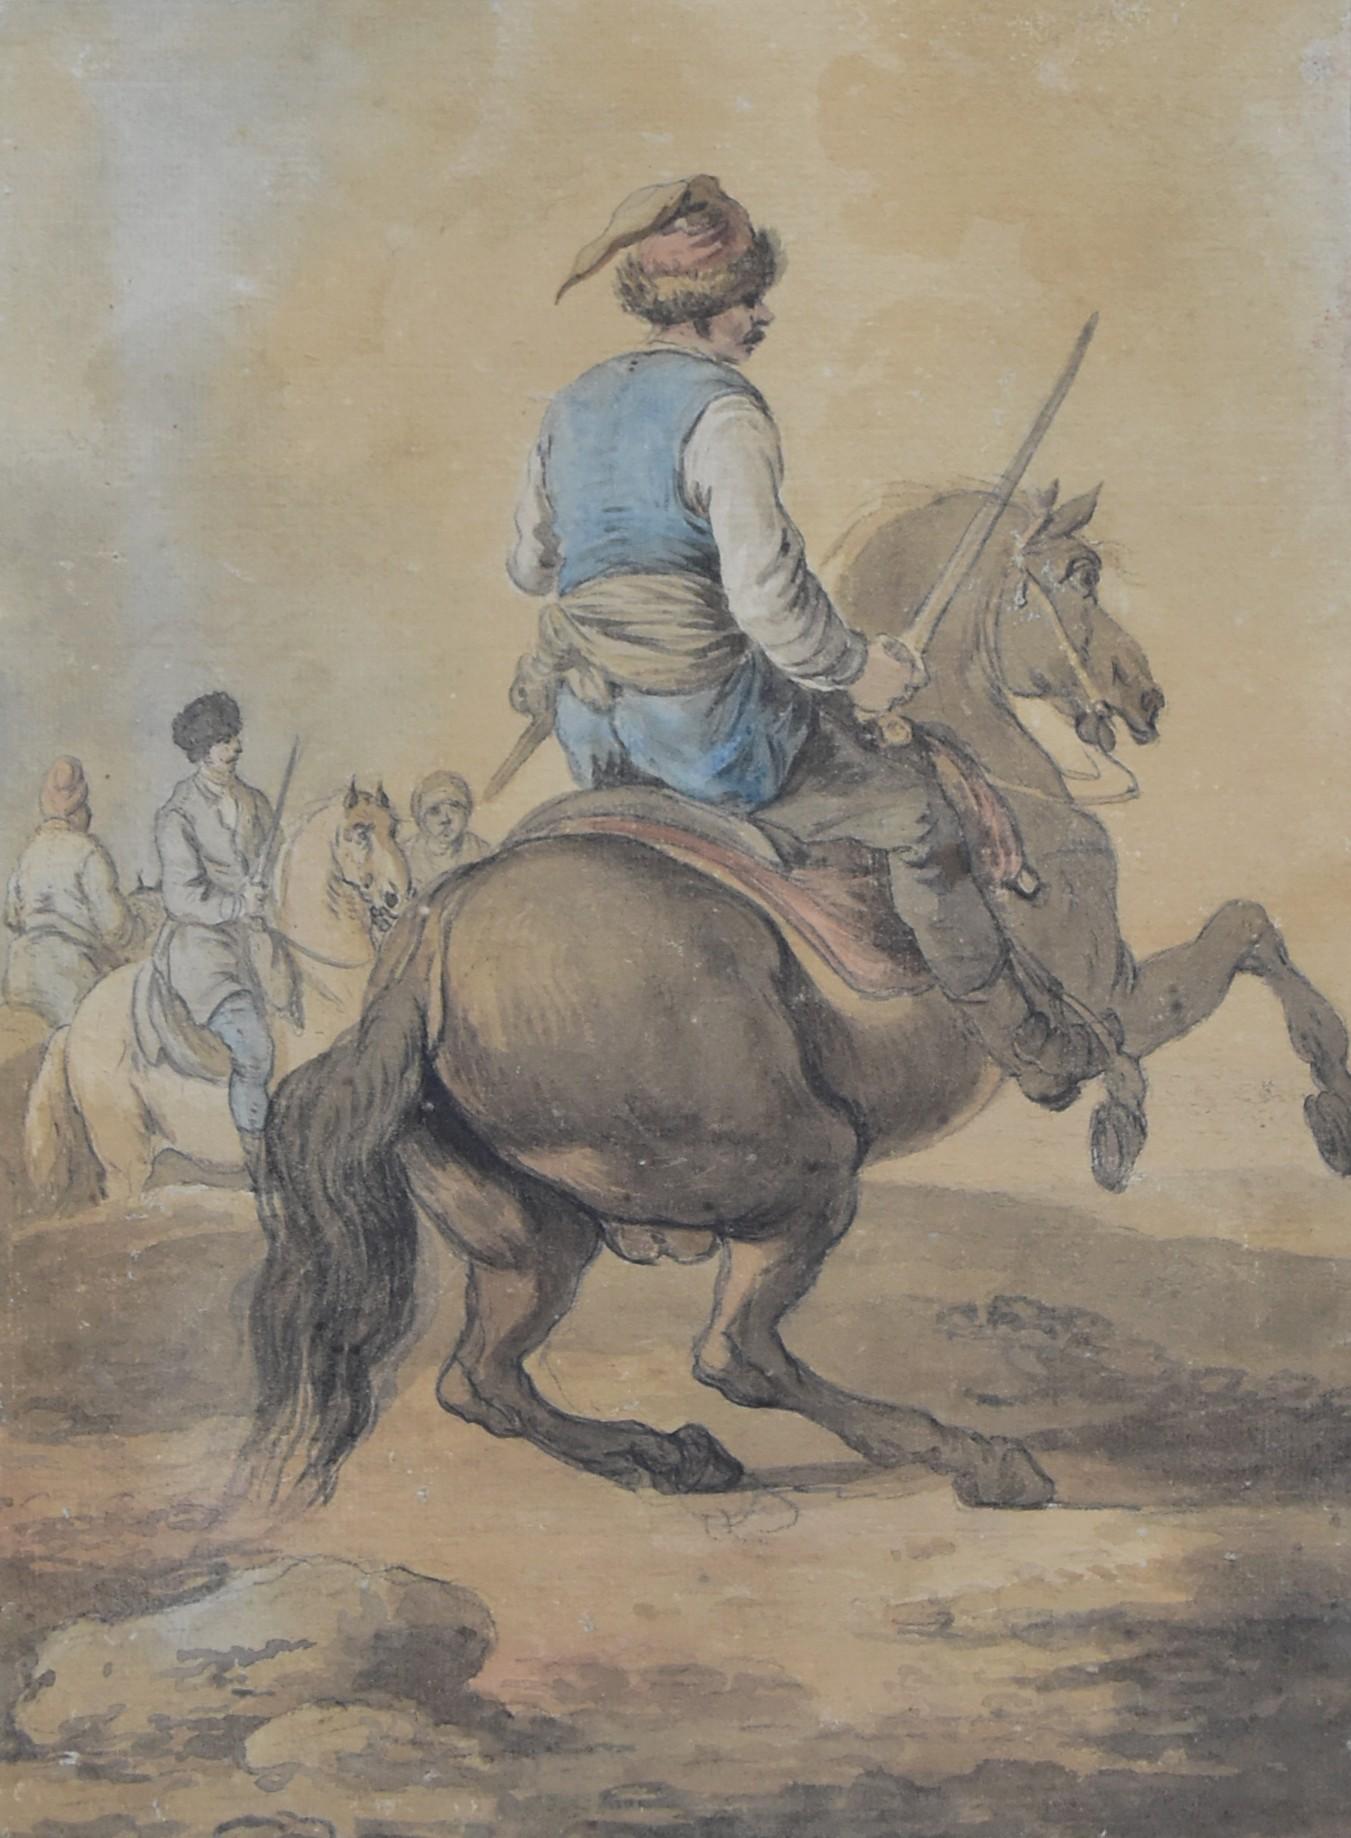 Attributed to Francesco Casanova (1727-1803), A Mamluk fighting , watercolor